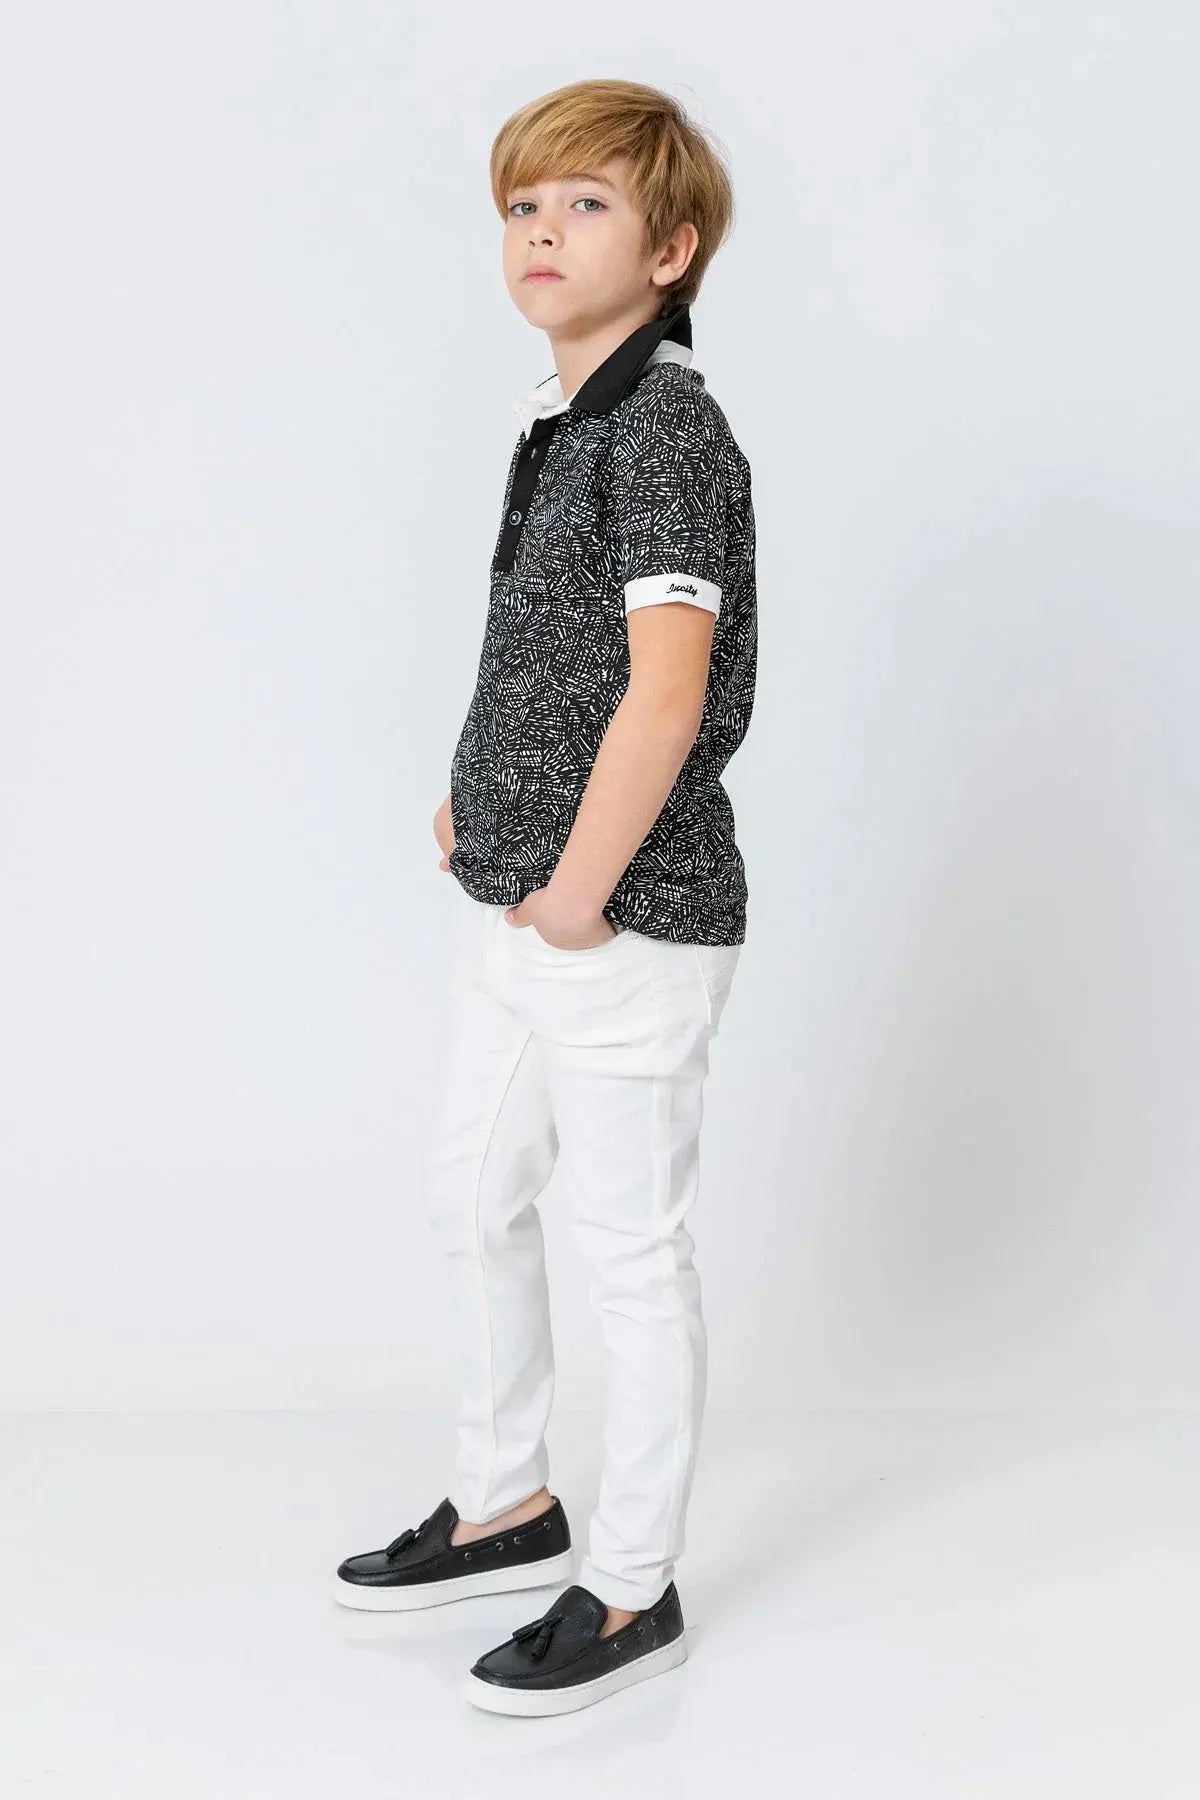 InCity Kids Boys Collared Printed Short Sleeve Button Polo Shirt InCity Boys & Girls